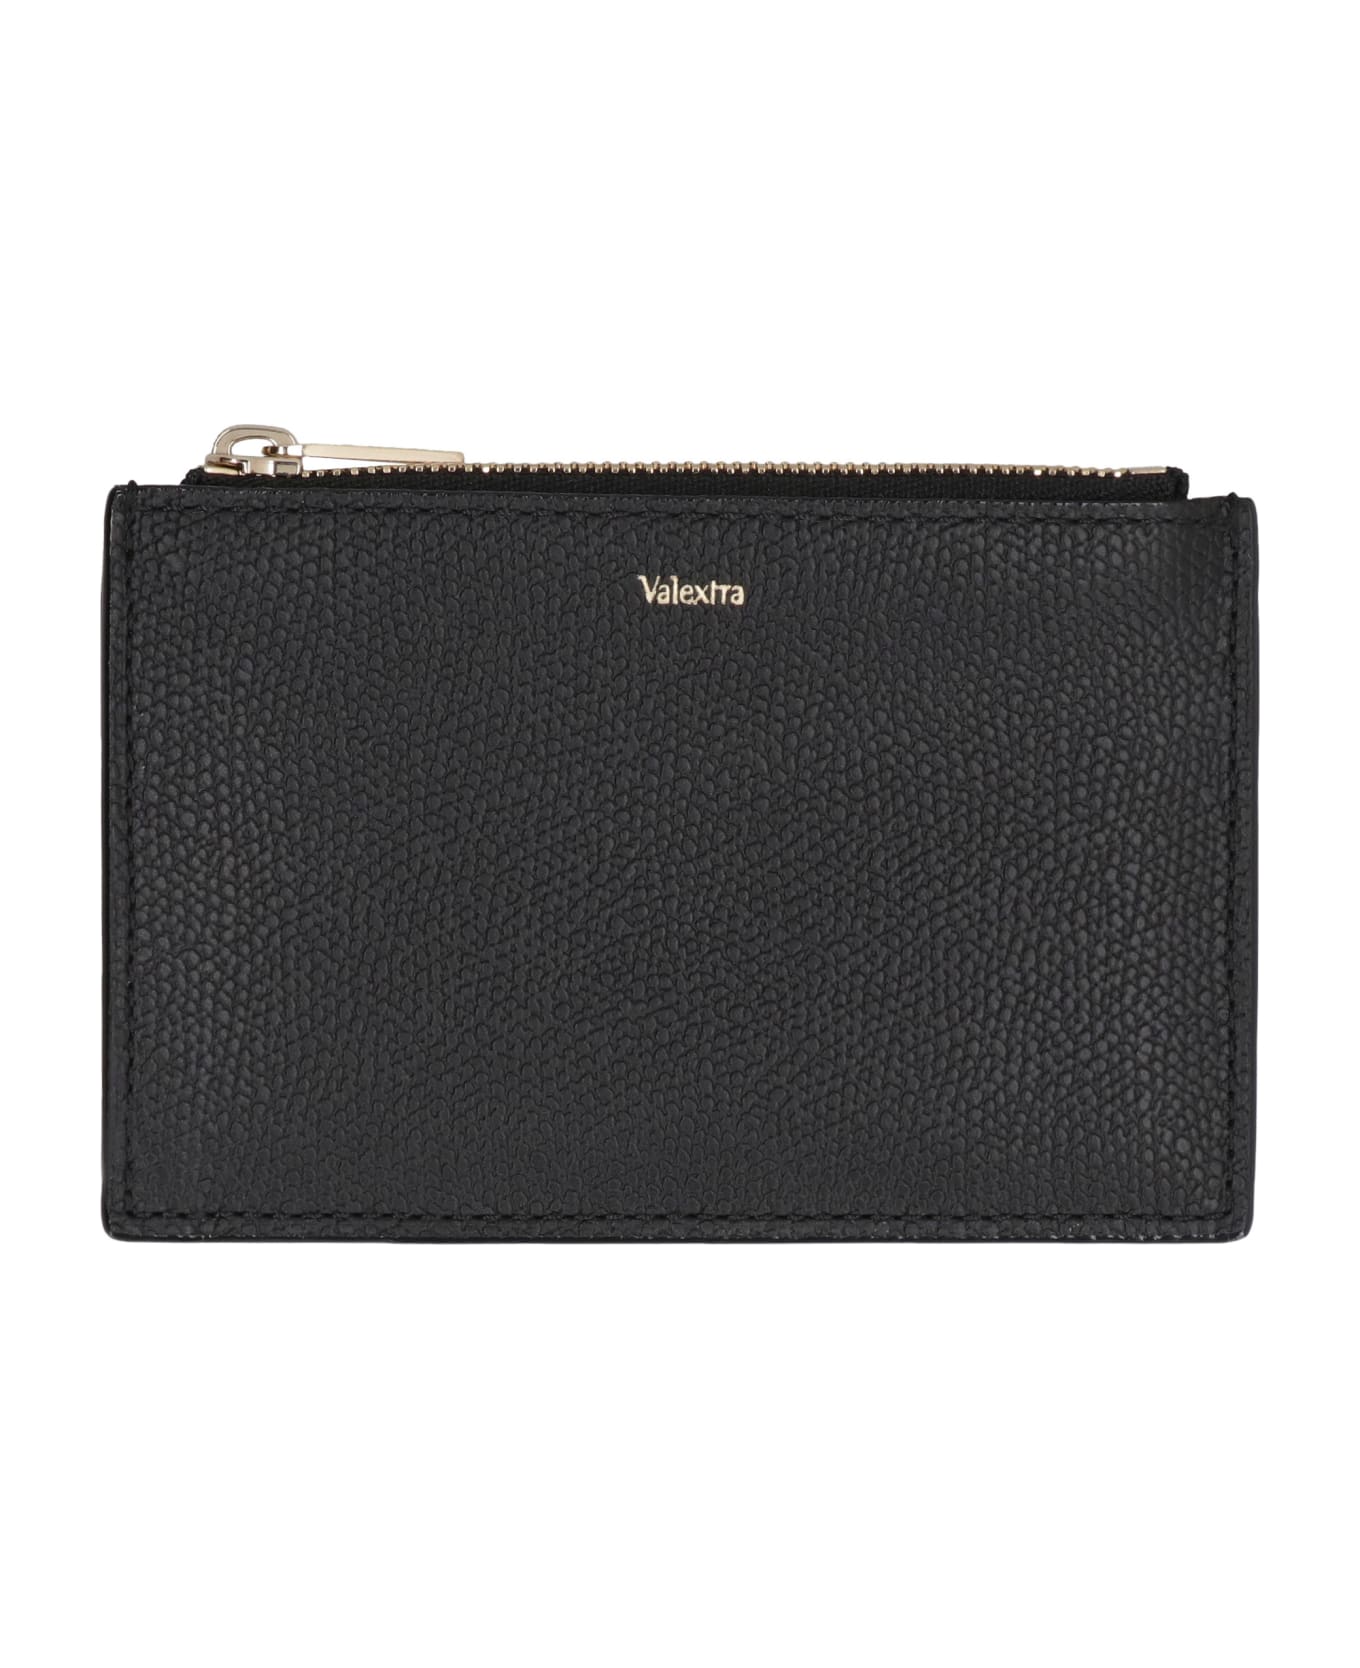 Valextra Leather Card Holder - black